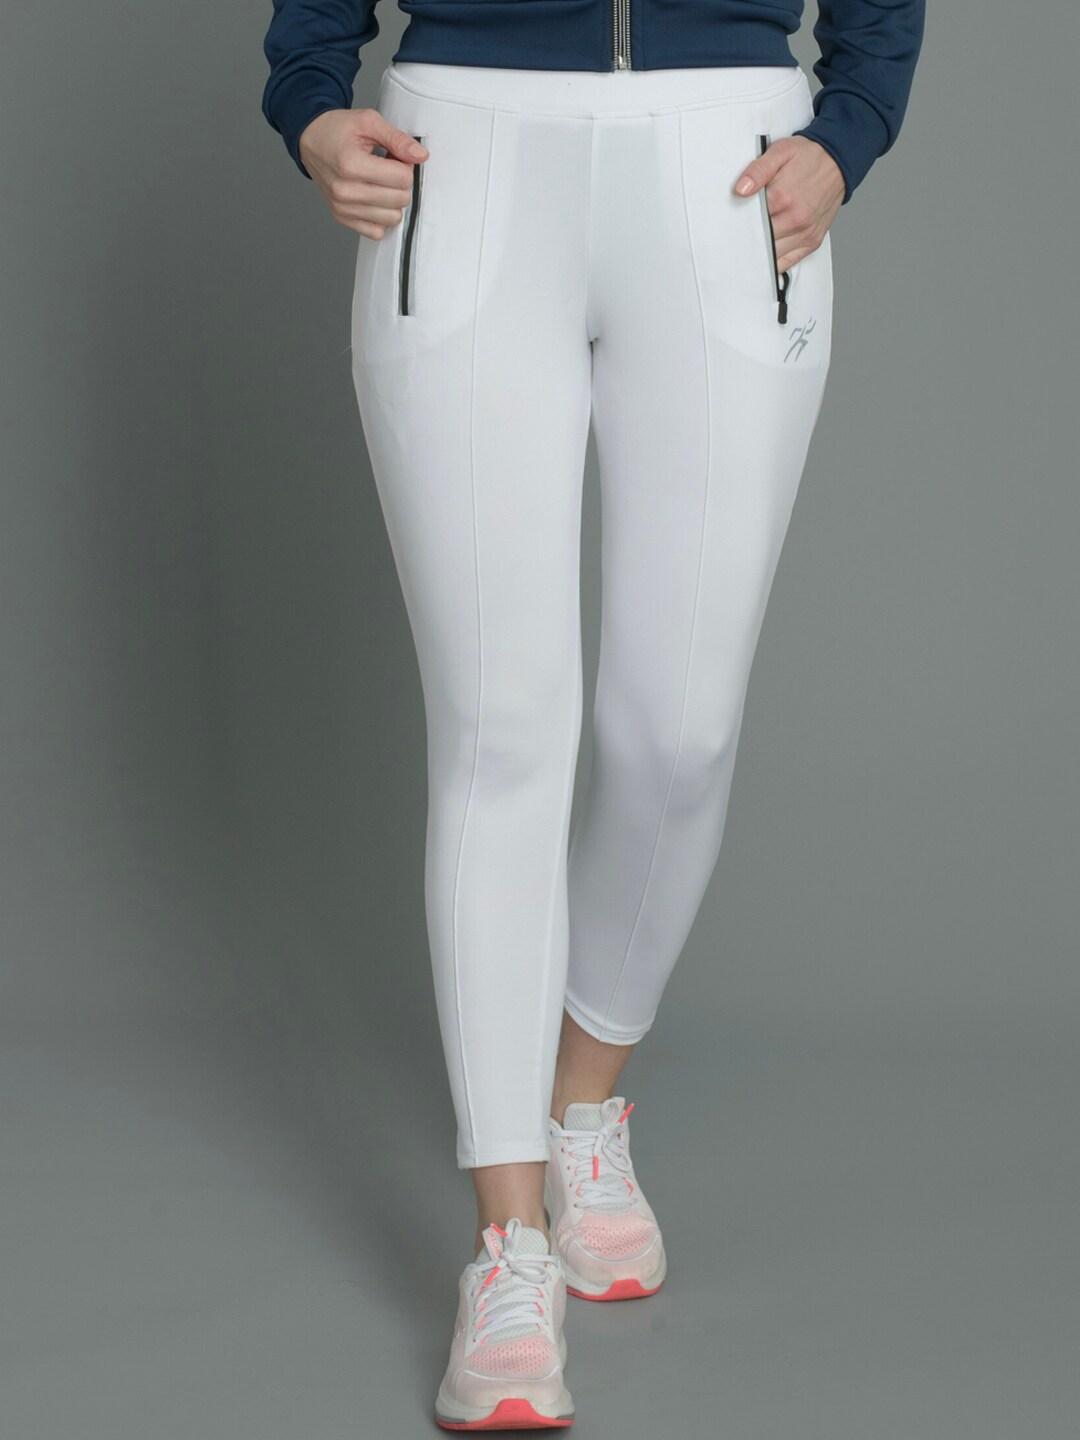 keepfit polyester spandex slim fit ankle length pocket leggings